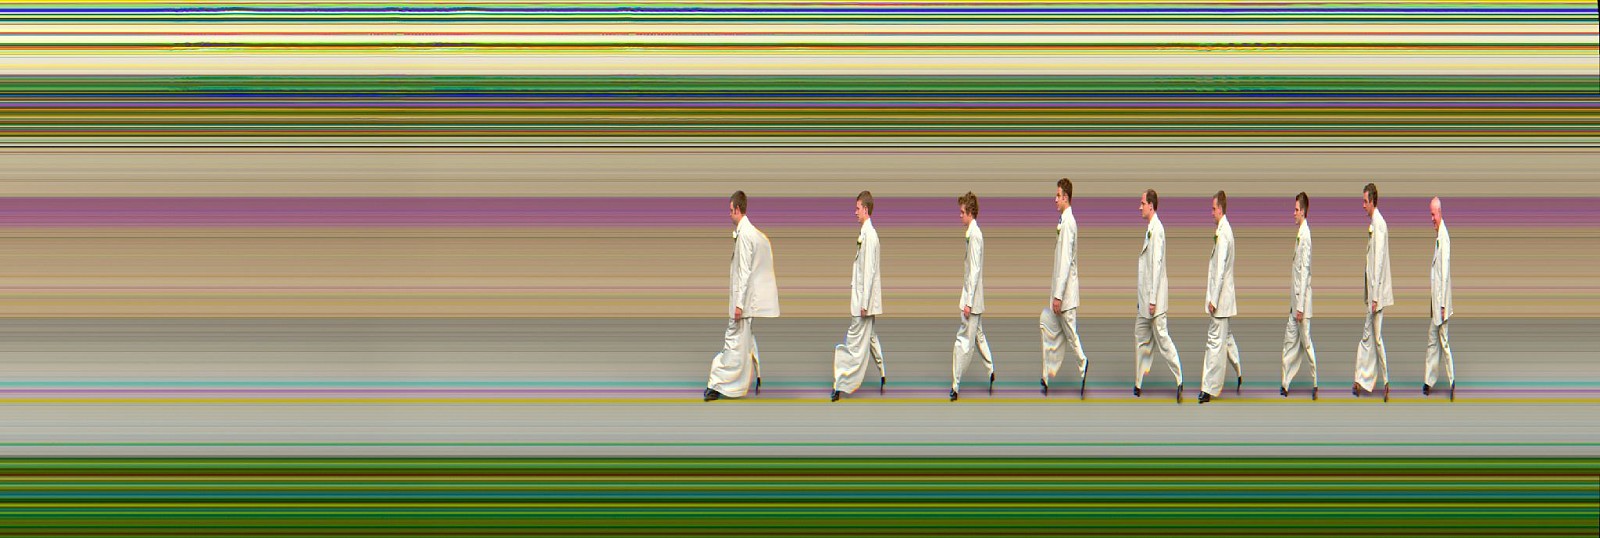 Jay Mark Johnson, WEDDING CAROLINE MEN, 2007 Cincinatti OH
archival pigment on paper, mounted on aluminum, 40 x 96 in. (101.6 x 243.8 cm)